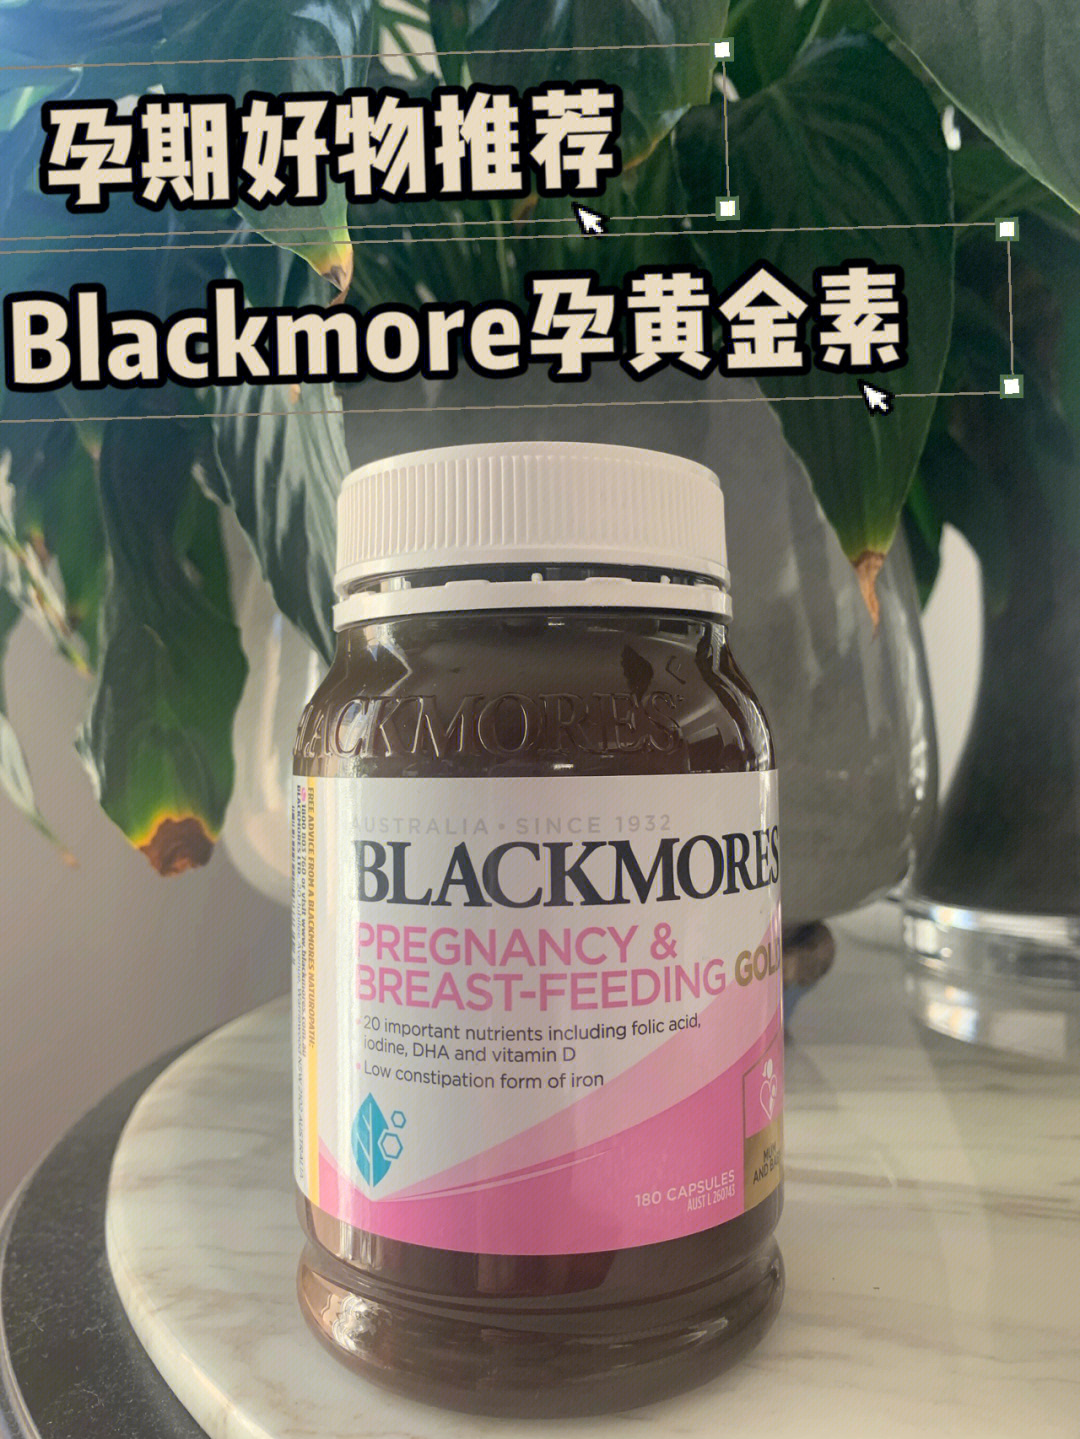 black mores黄金素图片